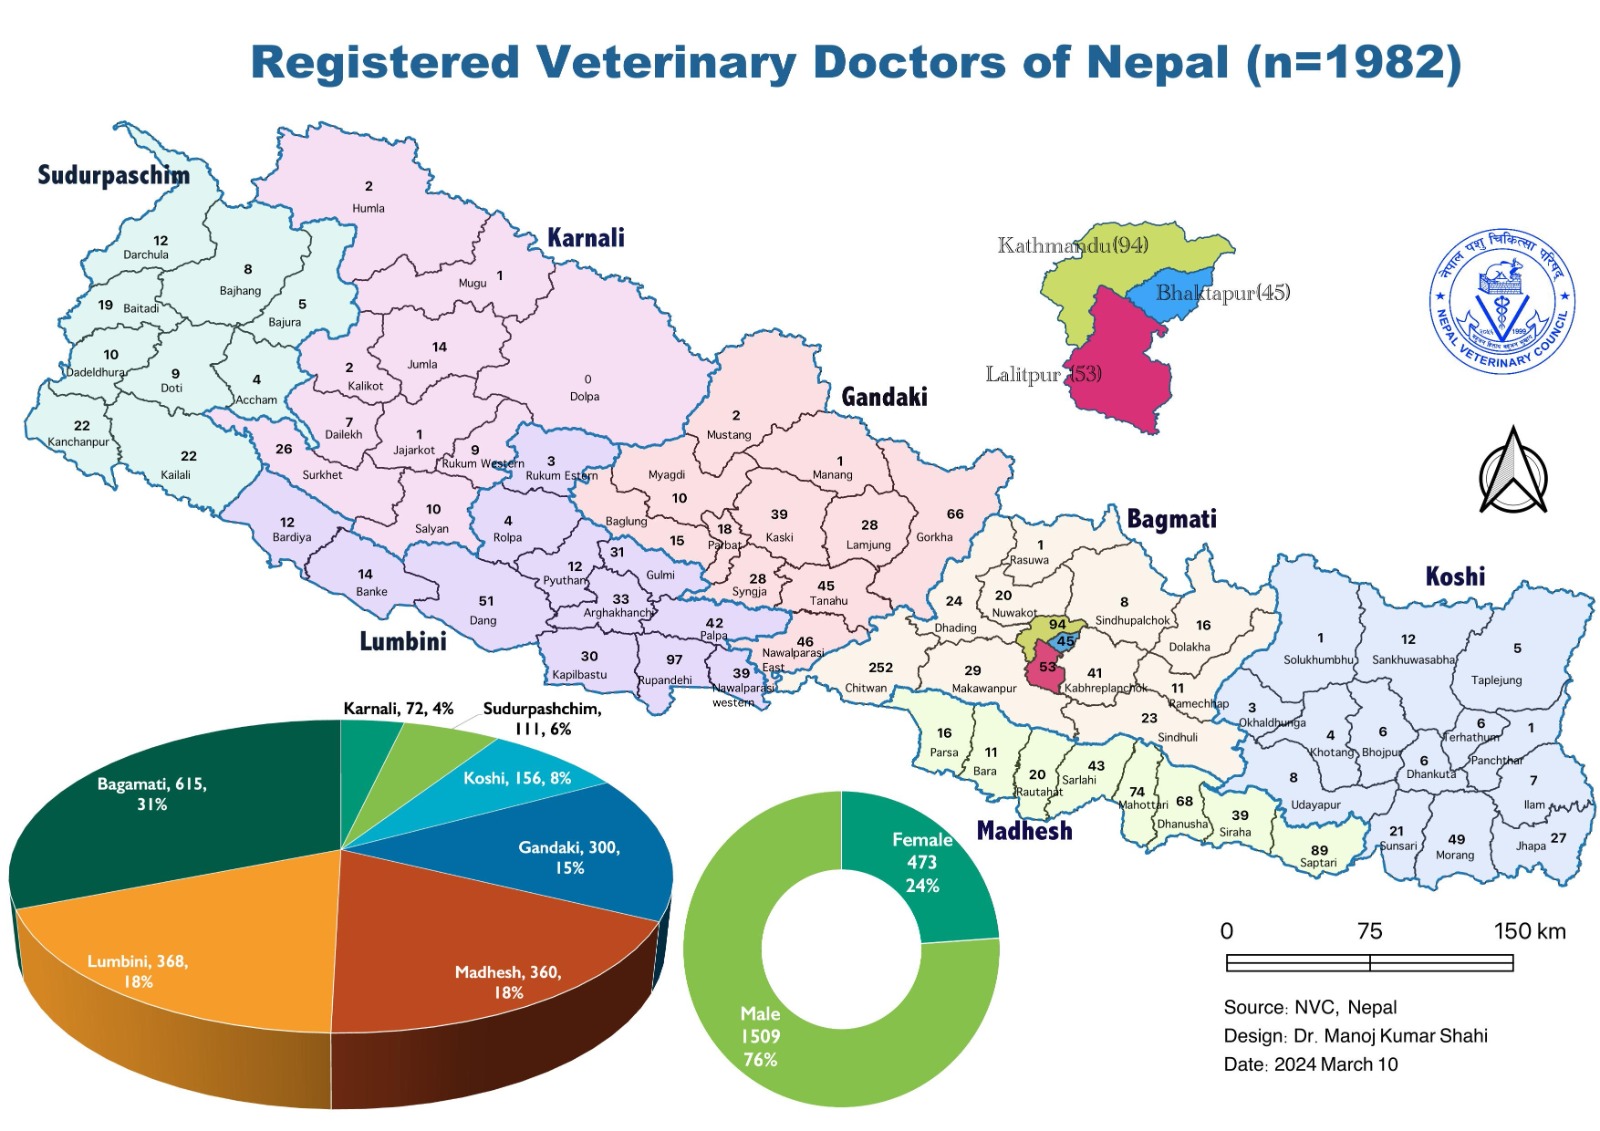 Slider Image: Registered Veterinarians according to permanent address.